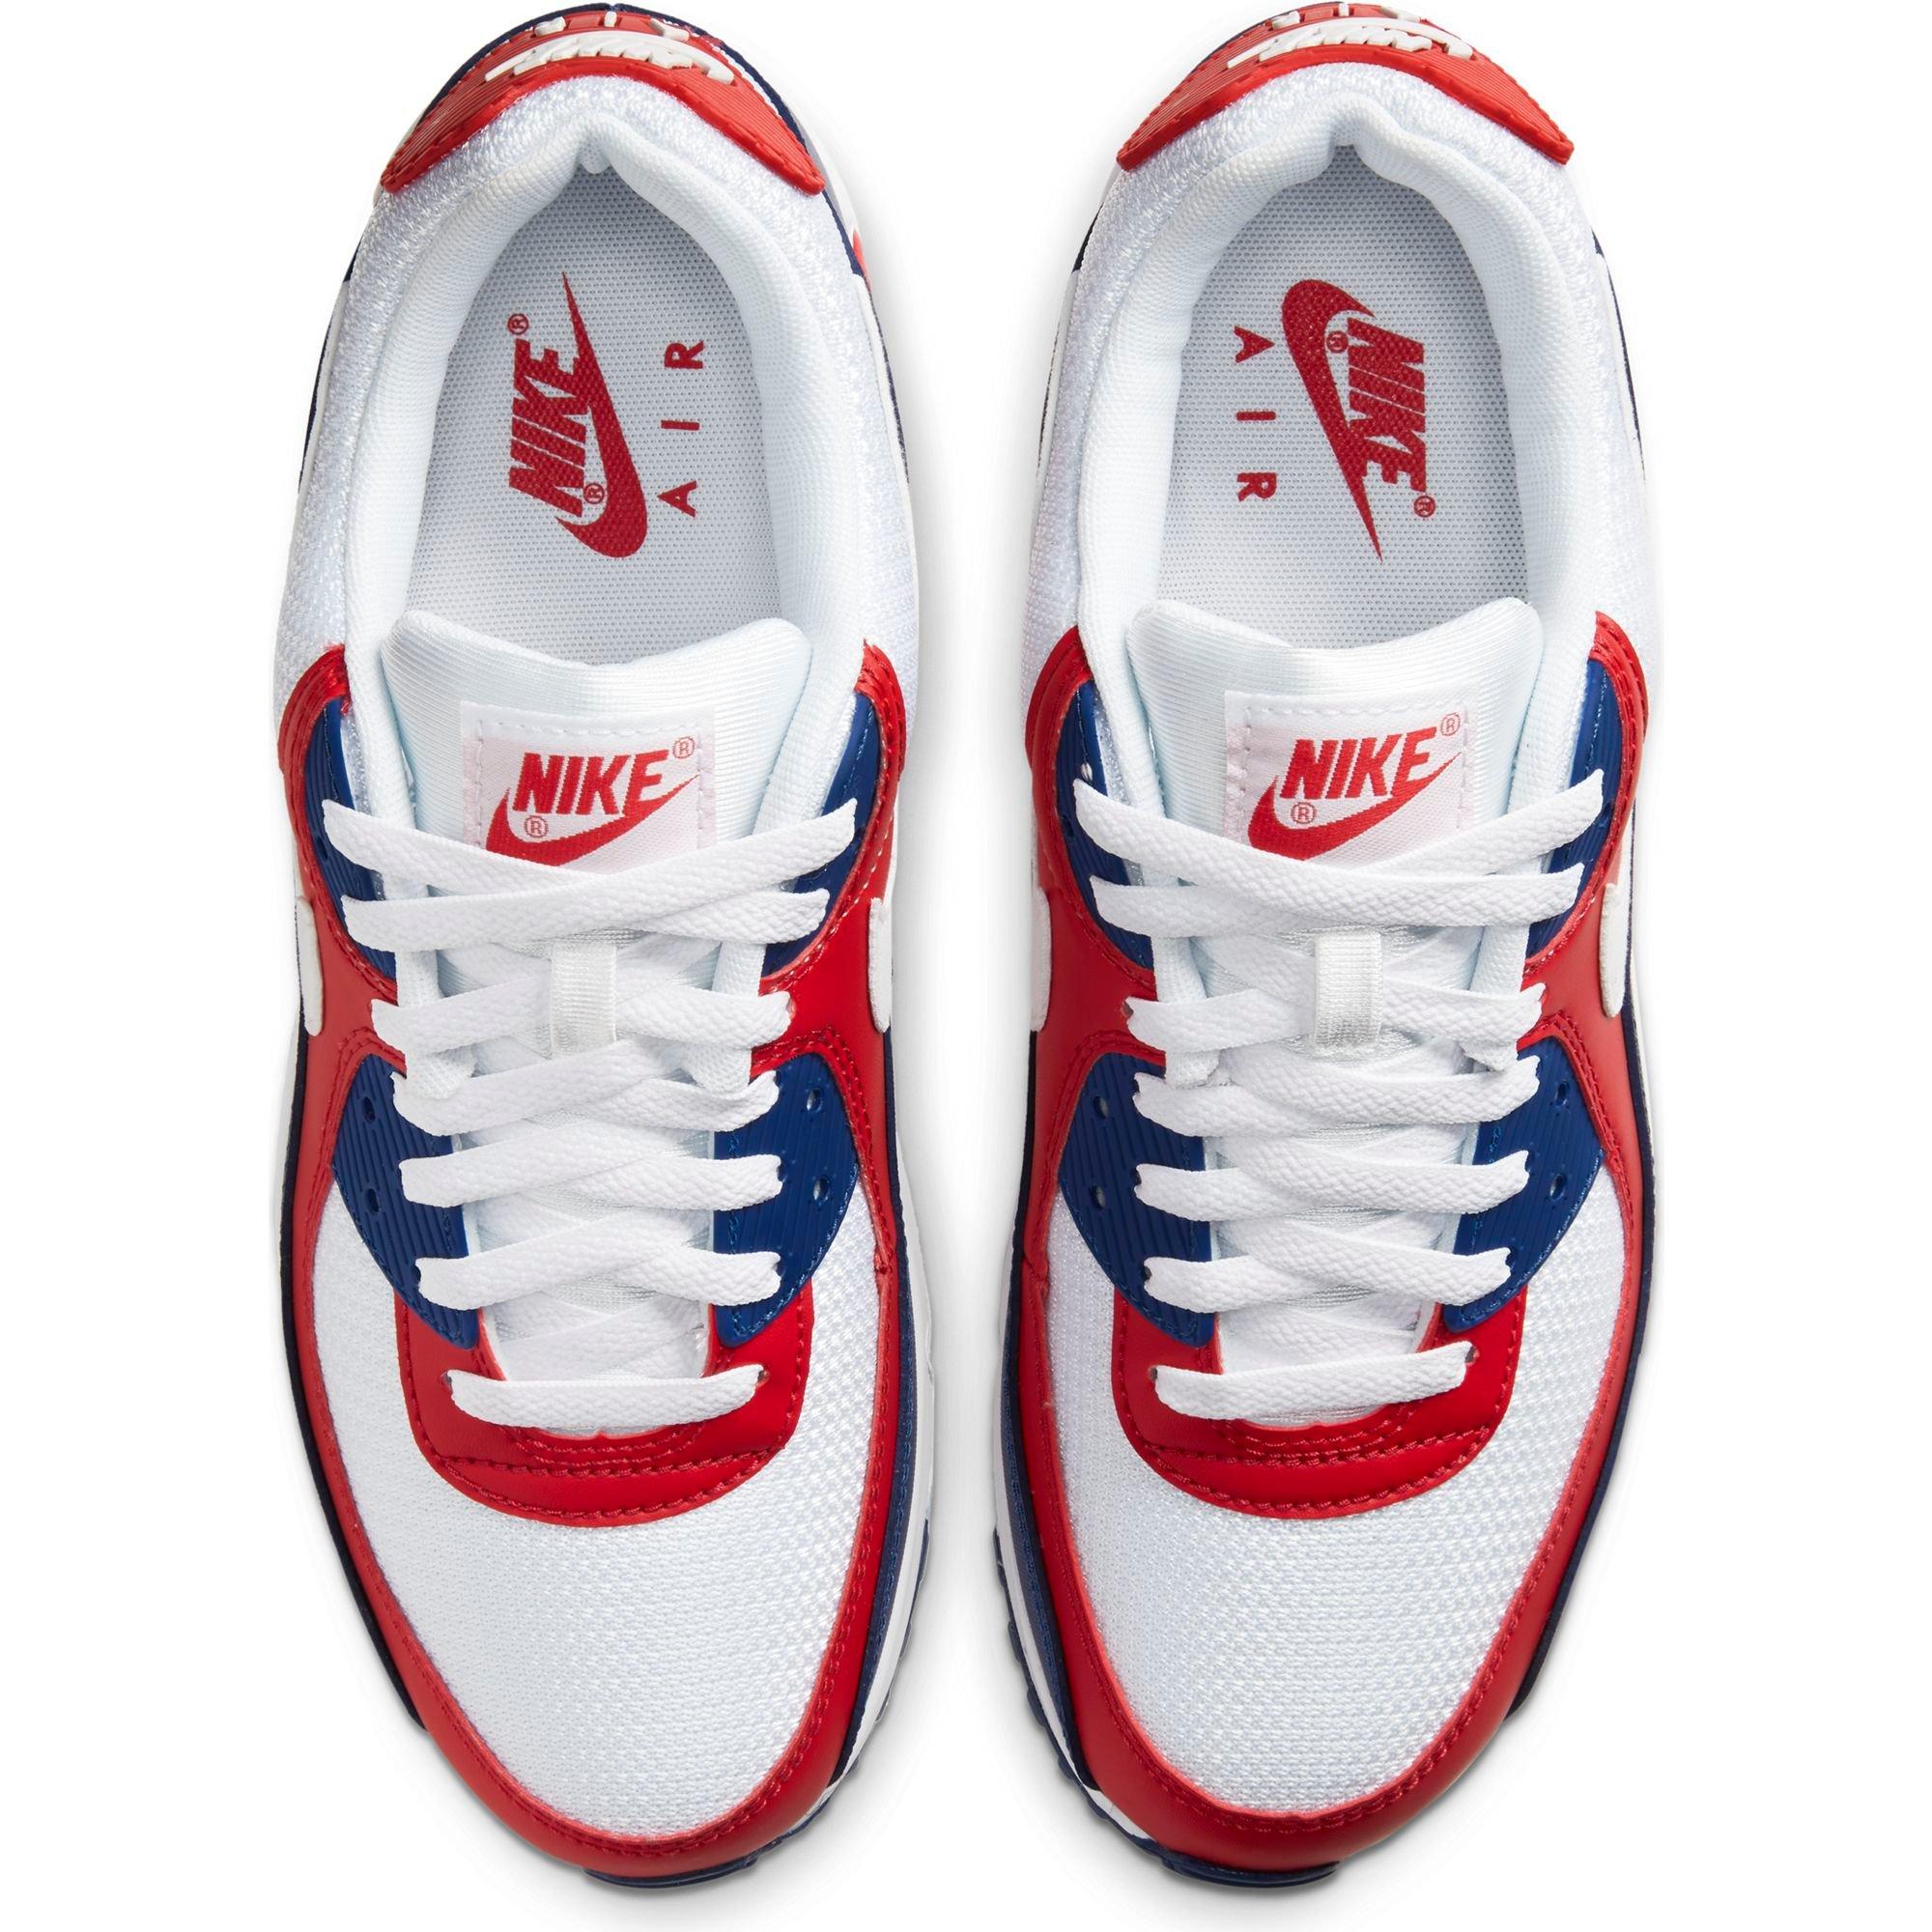 Departamento ilegal cortina Nike Air Max 90 "White/Red/Blue" Men's Shoe